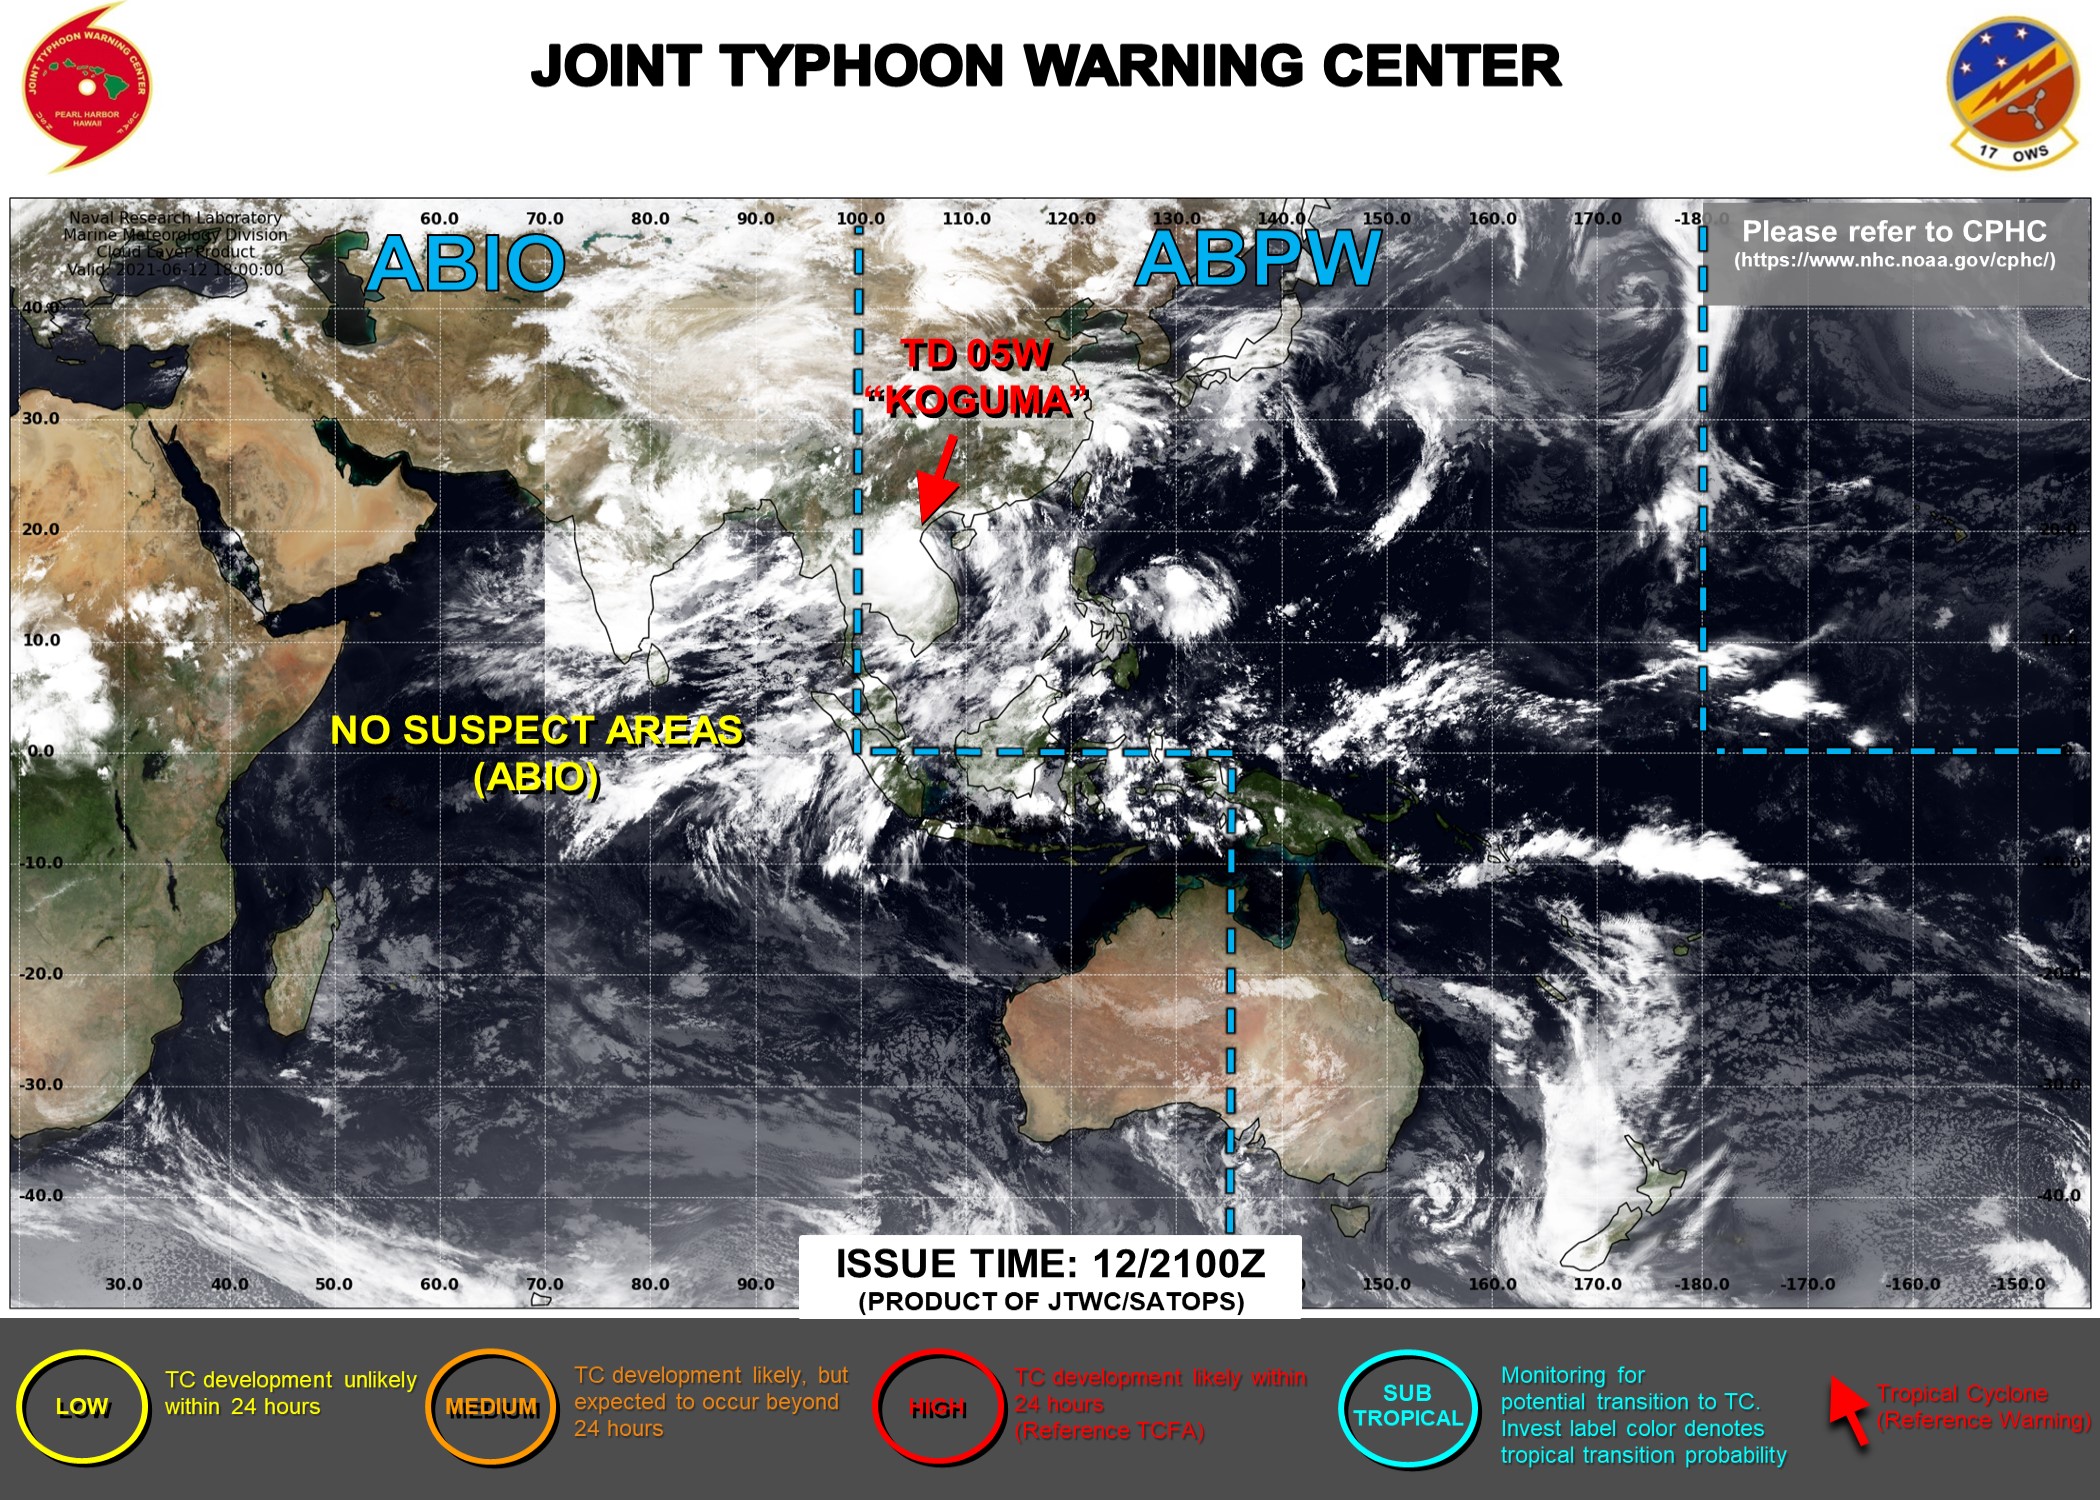 12/21UTC. JTWC ISSUED THE FINAL WARNING ON 05W(KOGUMA) AT 12/21UTC. 3HOURLY SATELLITE BULLETINS ARE STILL ISSUED.